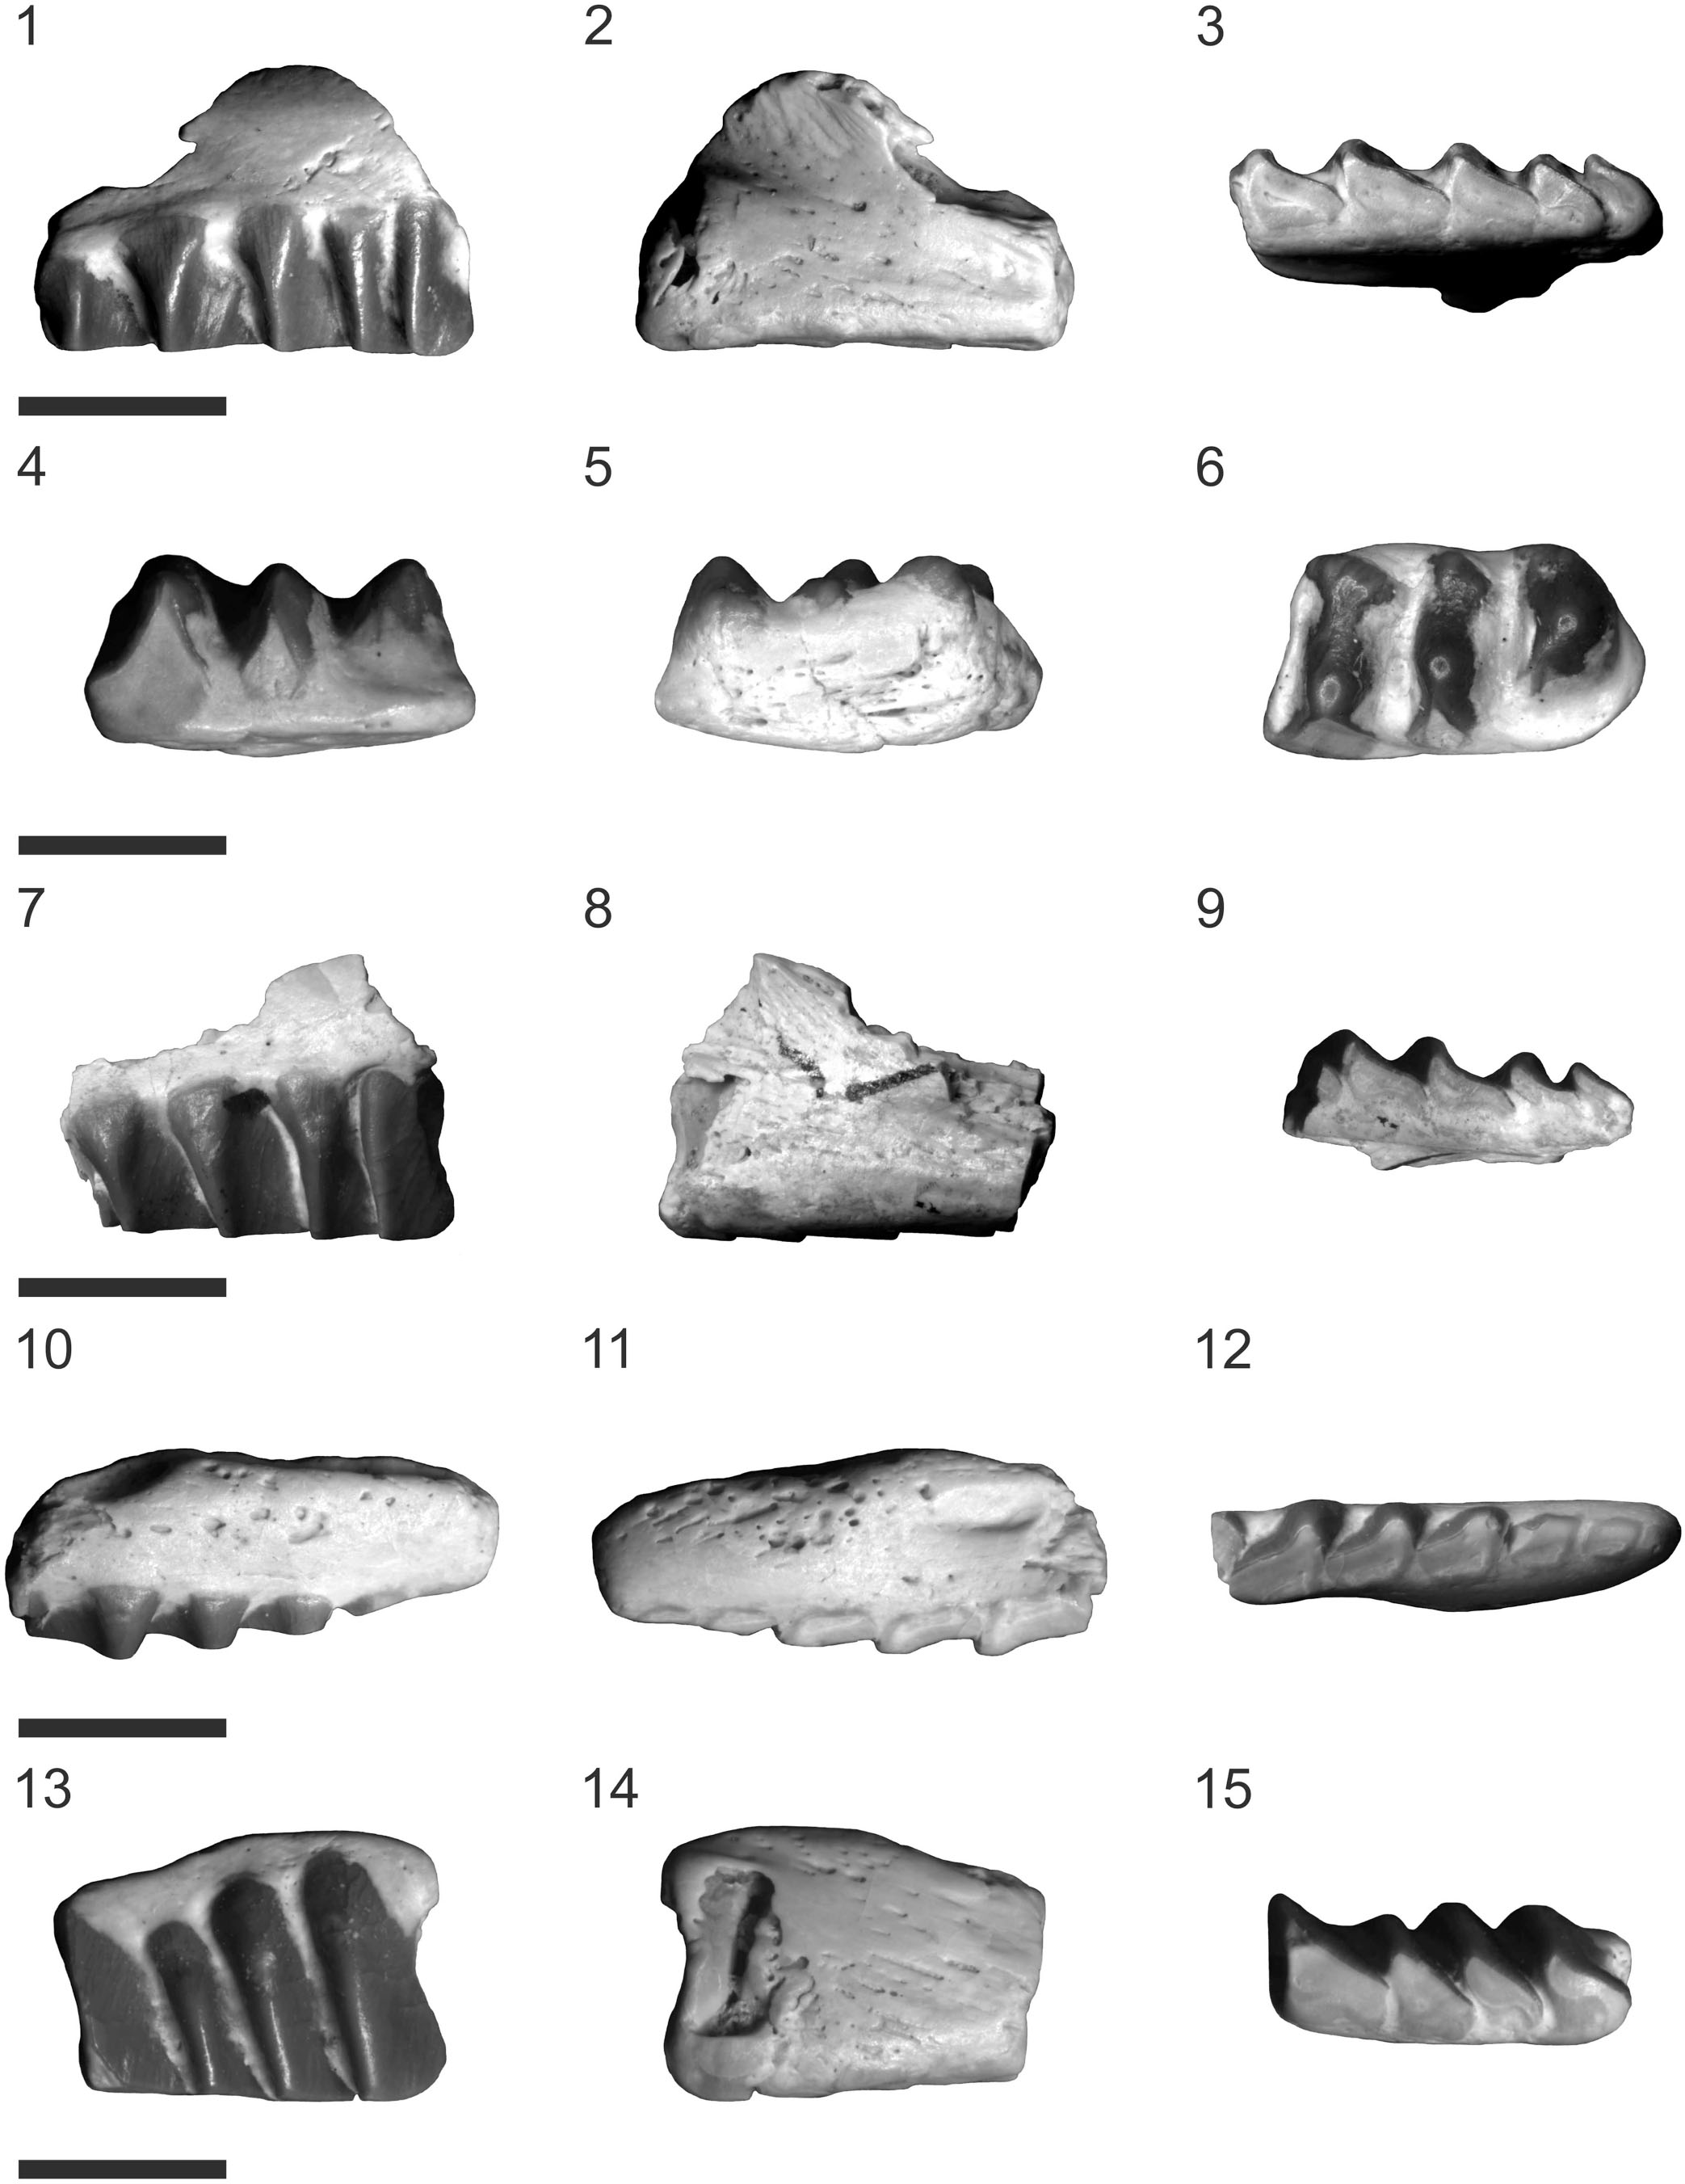 Taxonomic reassessment of Clevosaurus latidens Fraser, 1993 ...